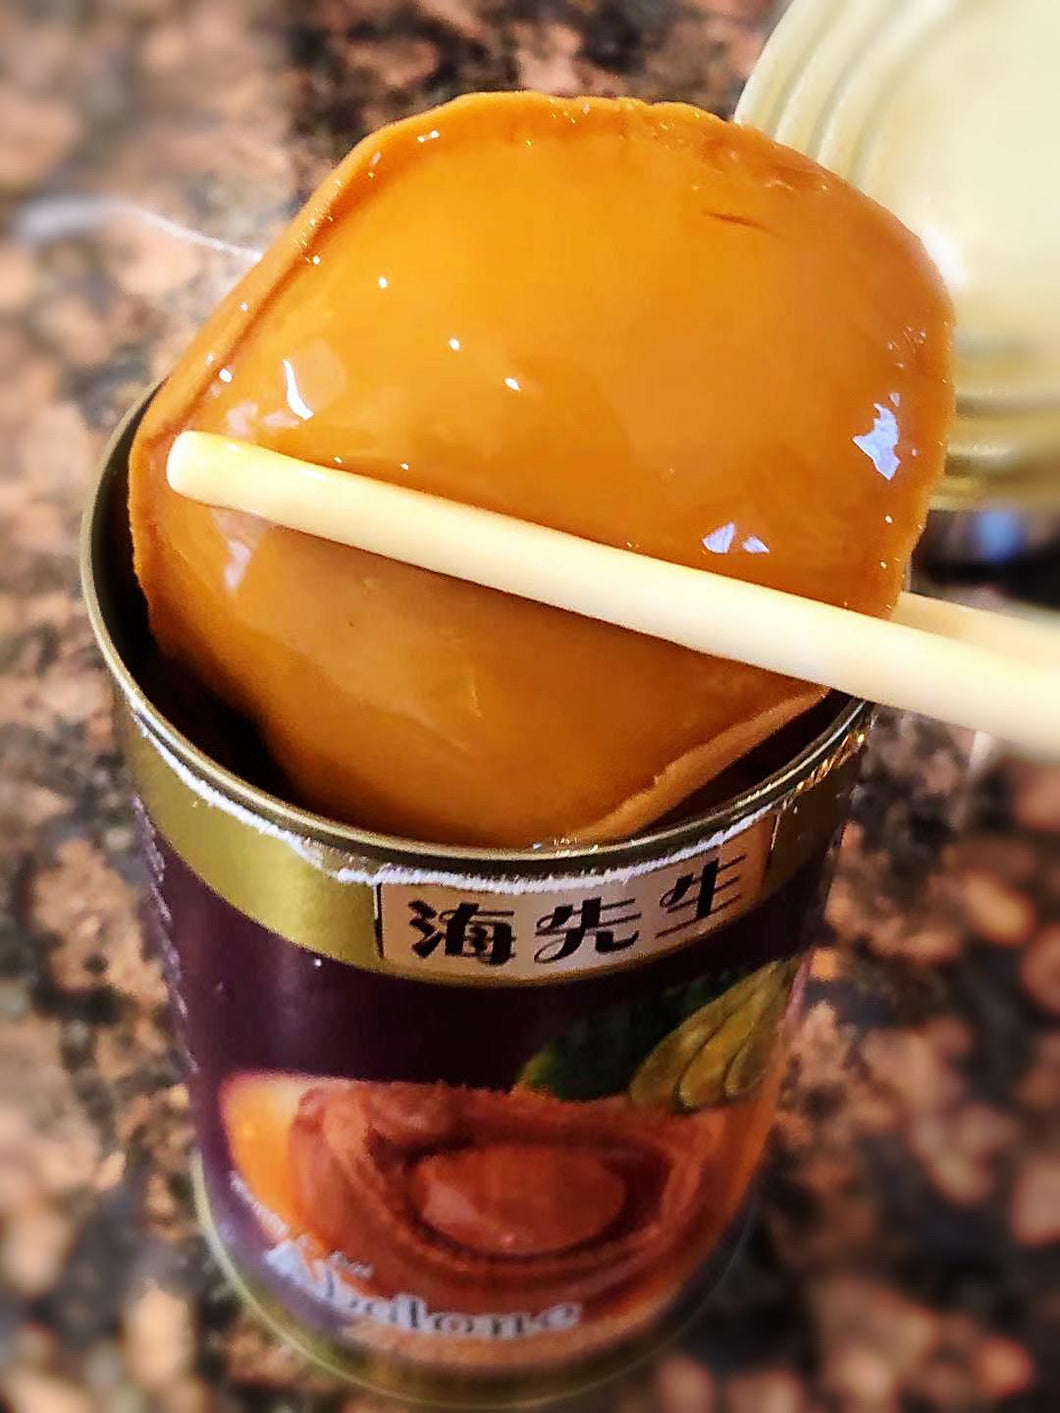 海先生 - 即食紅燒鮑魚1 罐 (三頭)  MR. OCEAN Abalone In Brown Sauce (3pcs/can)  #2020-3